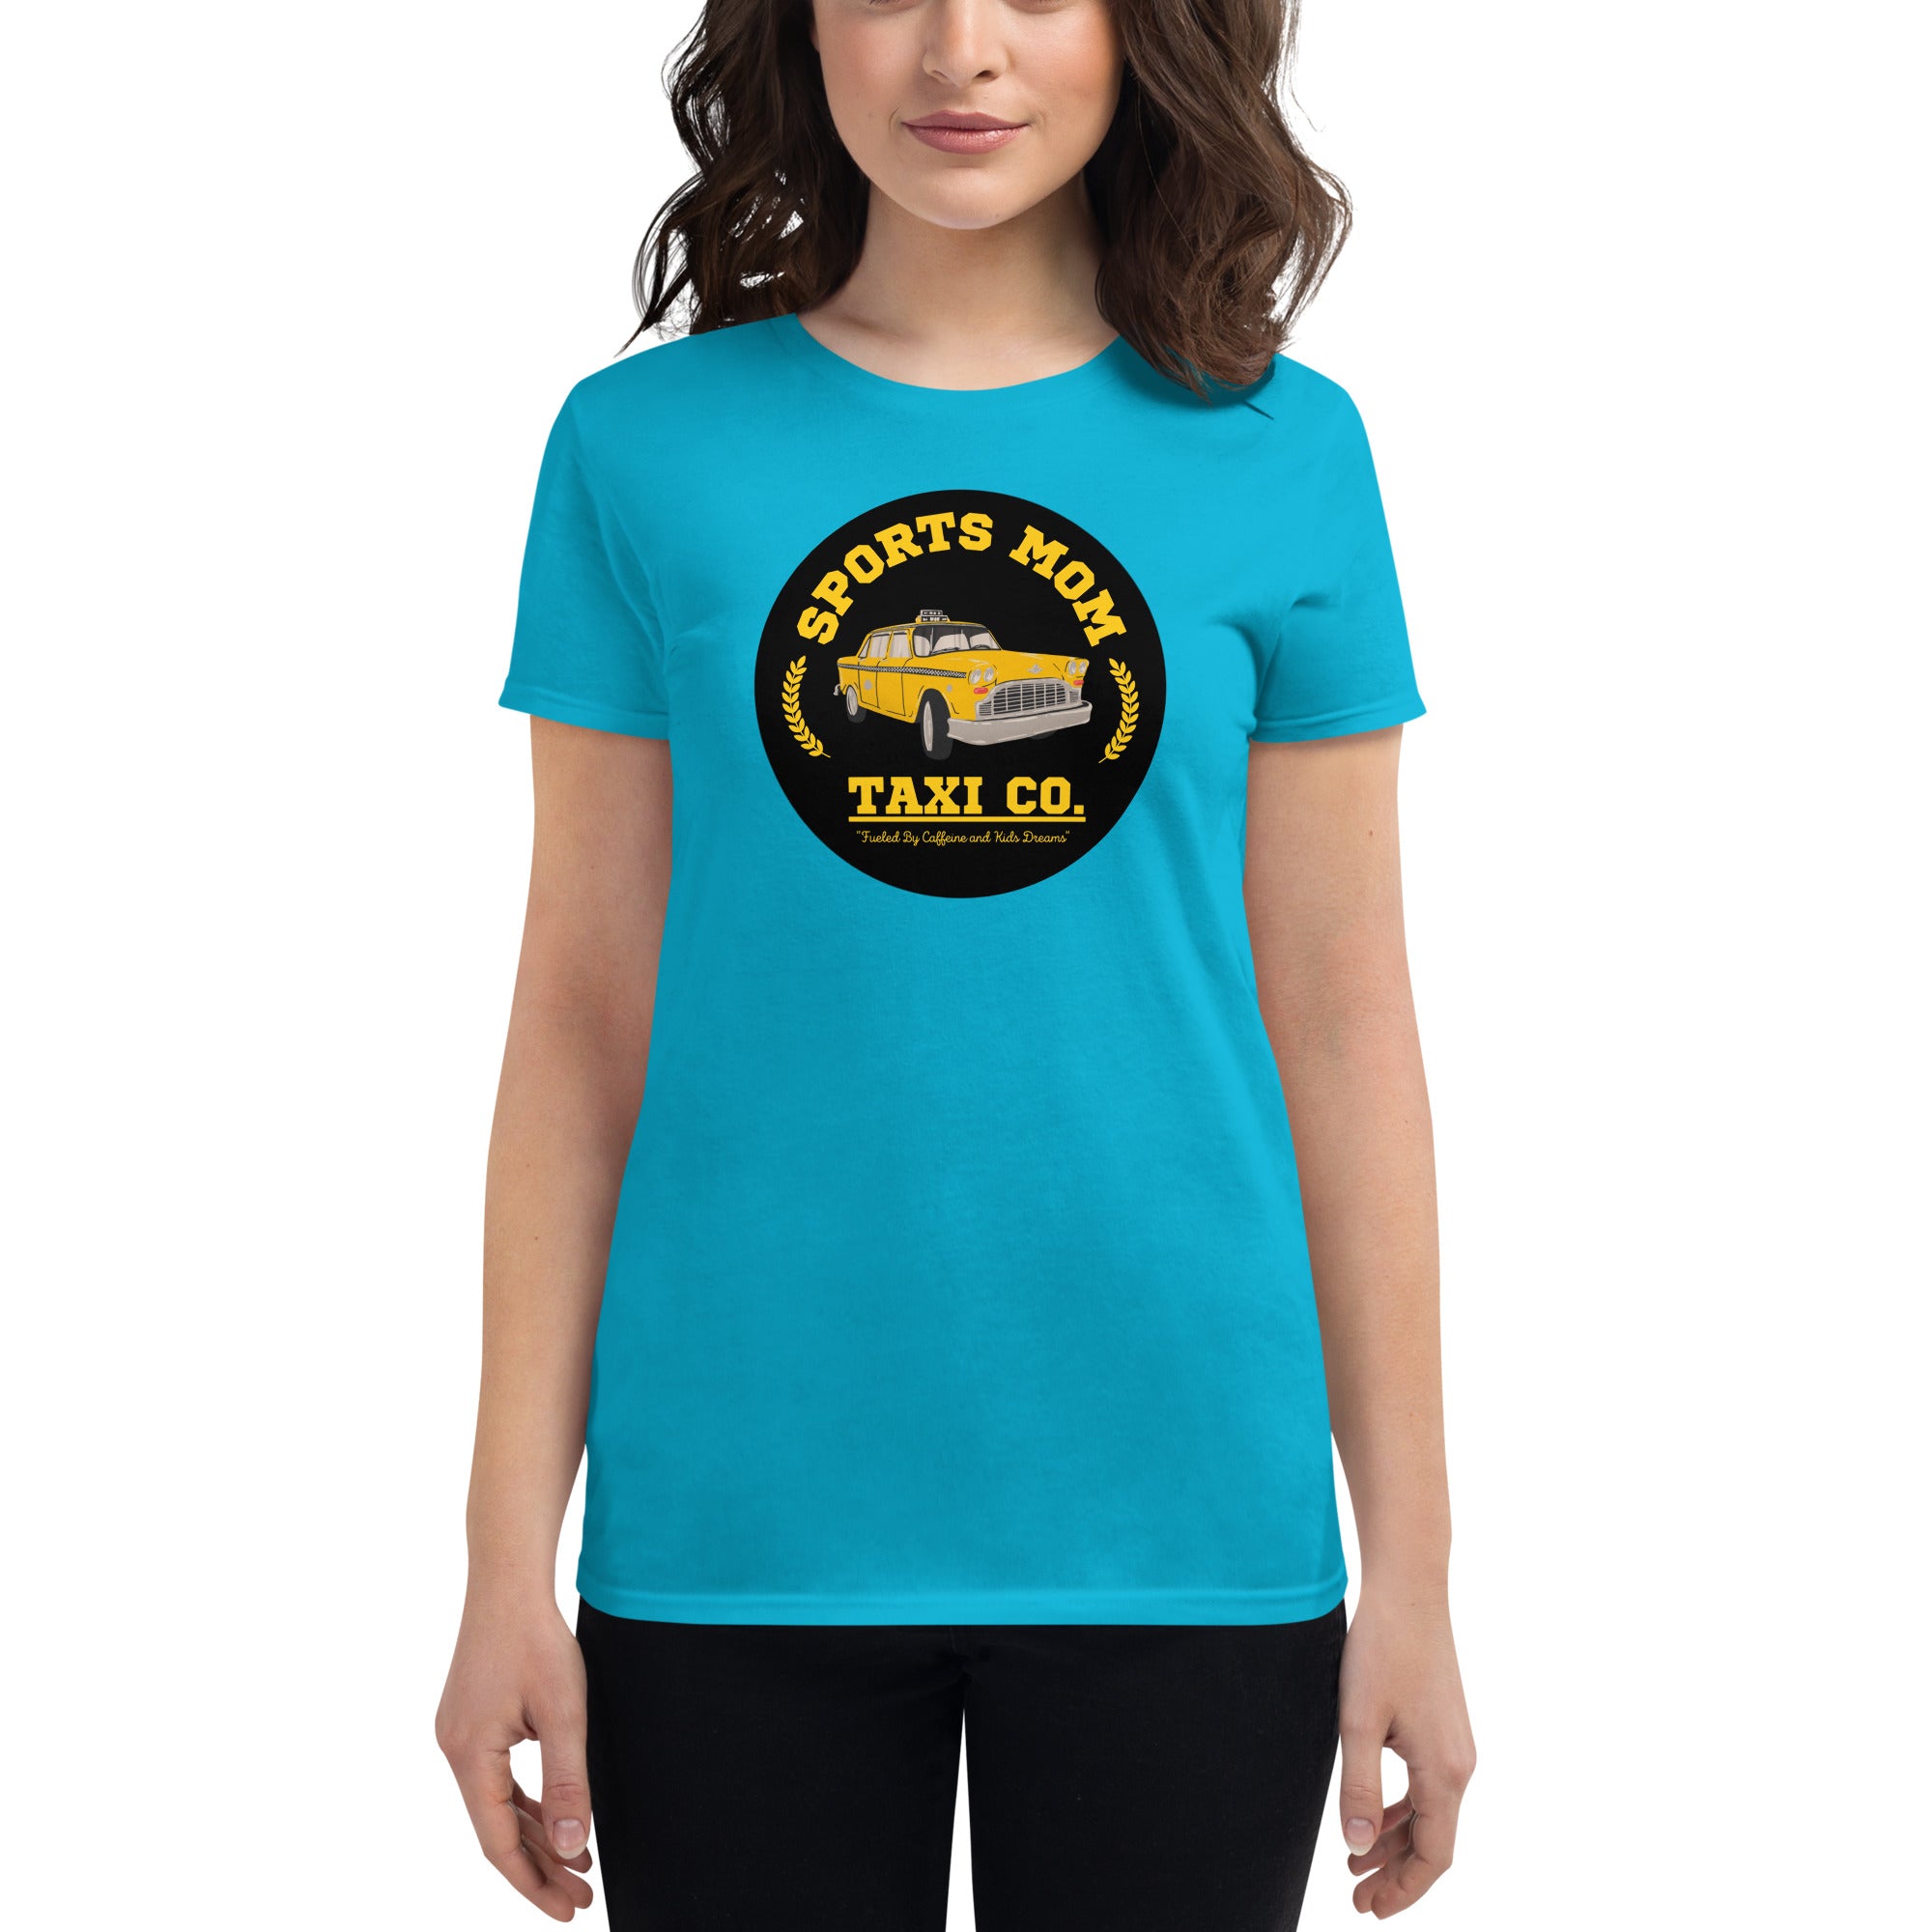 The Sports Mom Taxi Co. Original Classic T-Shirt